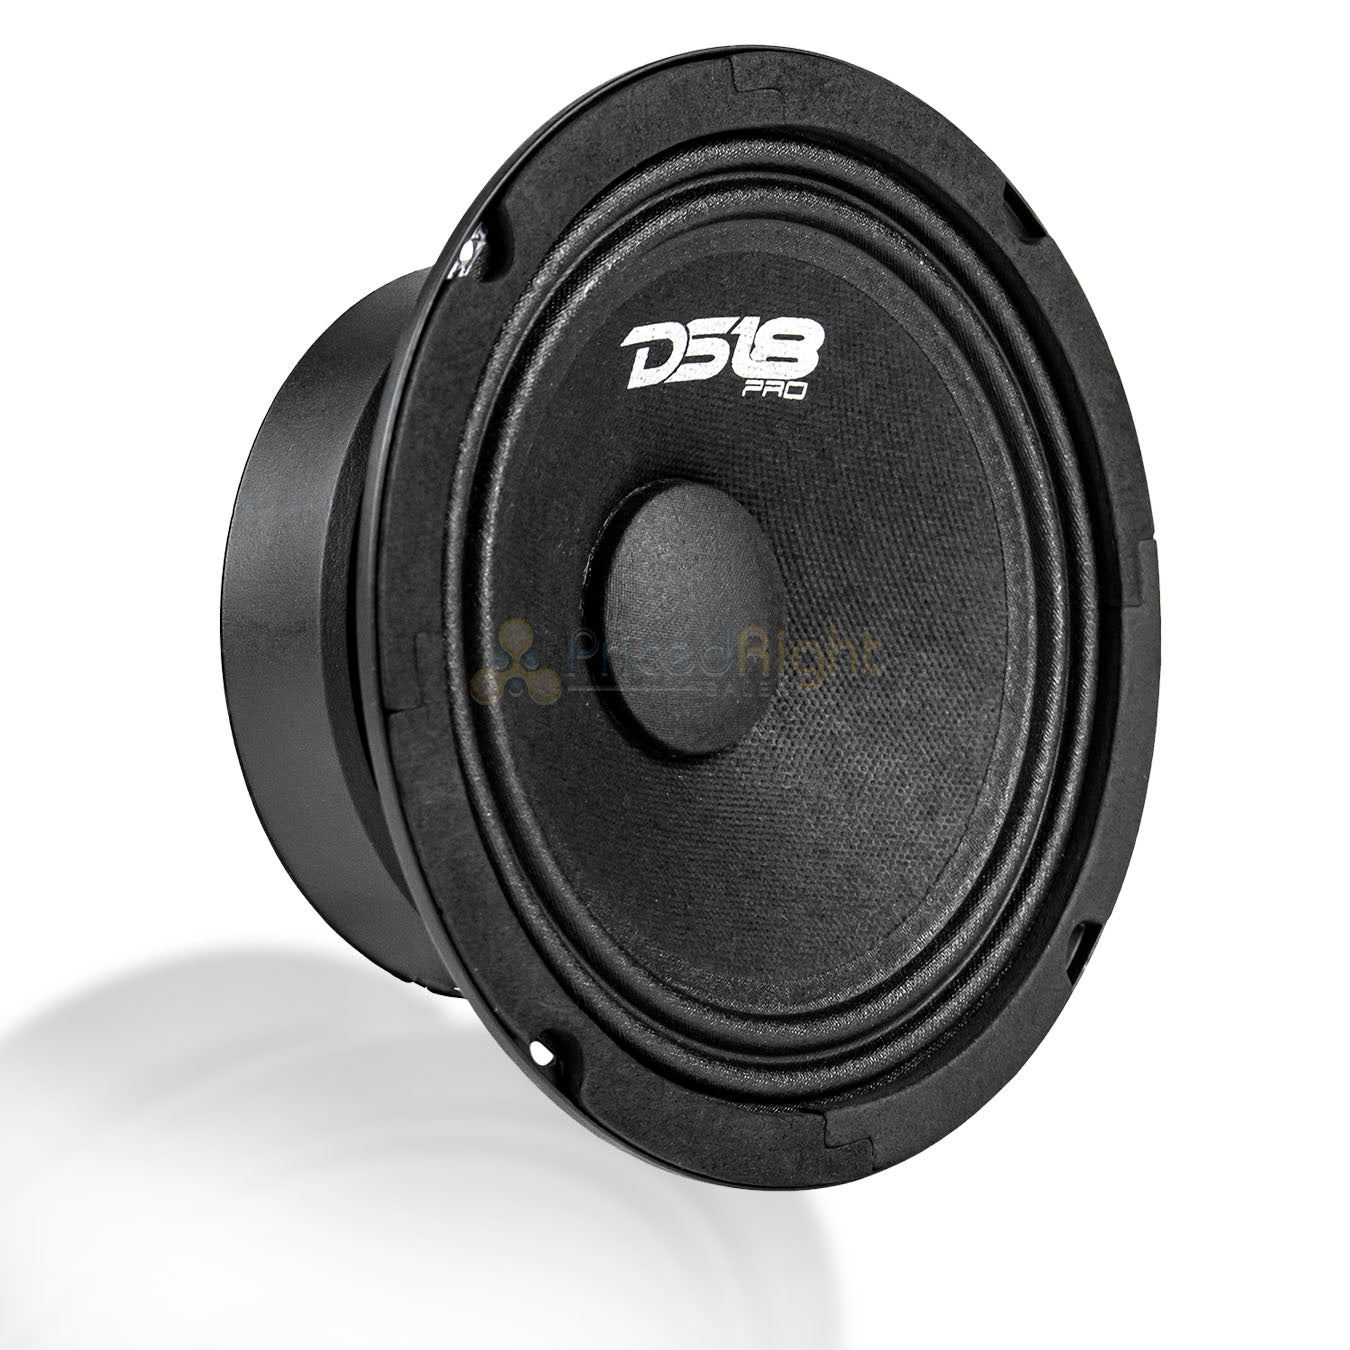 2 Pack DS18 PRO-GM6.4 6.5" Midrange Speakers 4 Ohm 960W Max Mid Range Pair